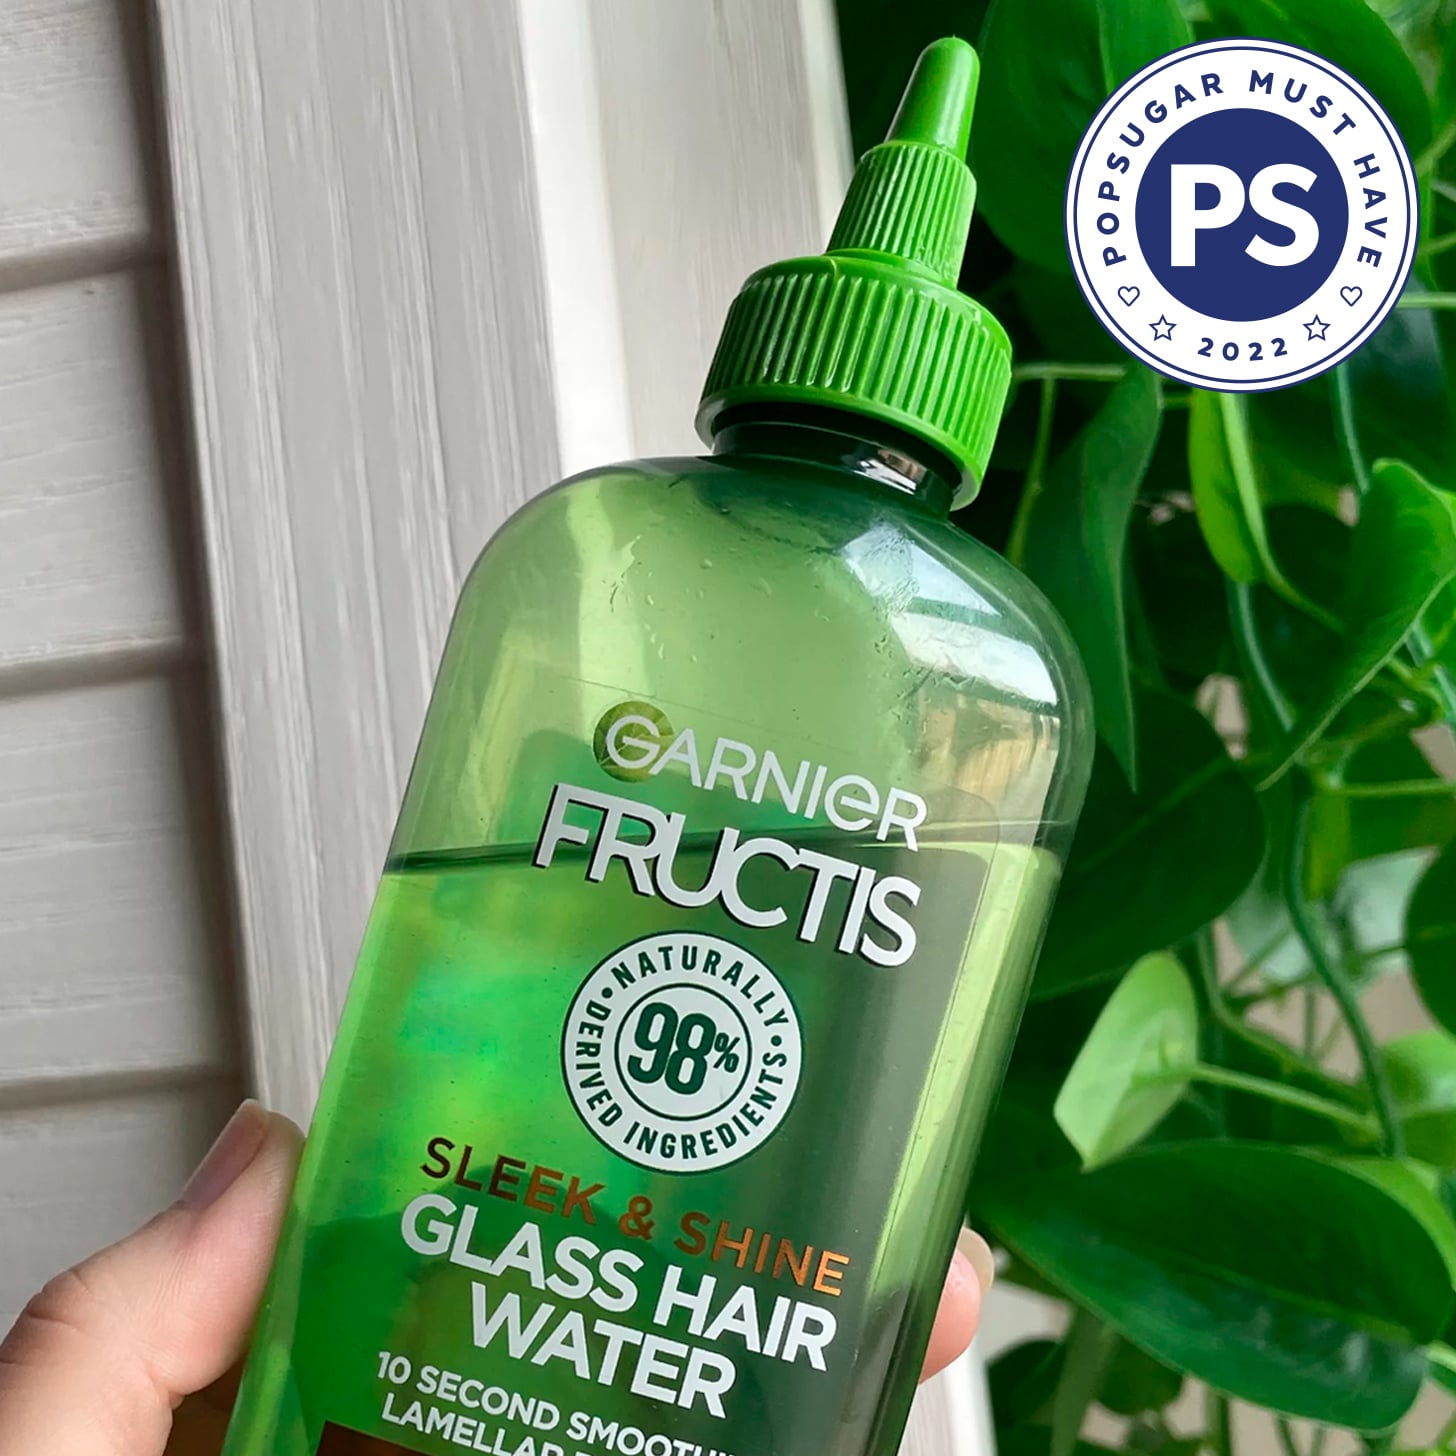 Garnier Sleek & Shine Glass Hair Water Review With Photos